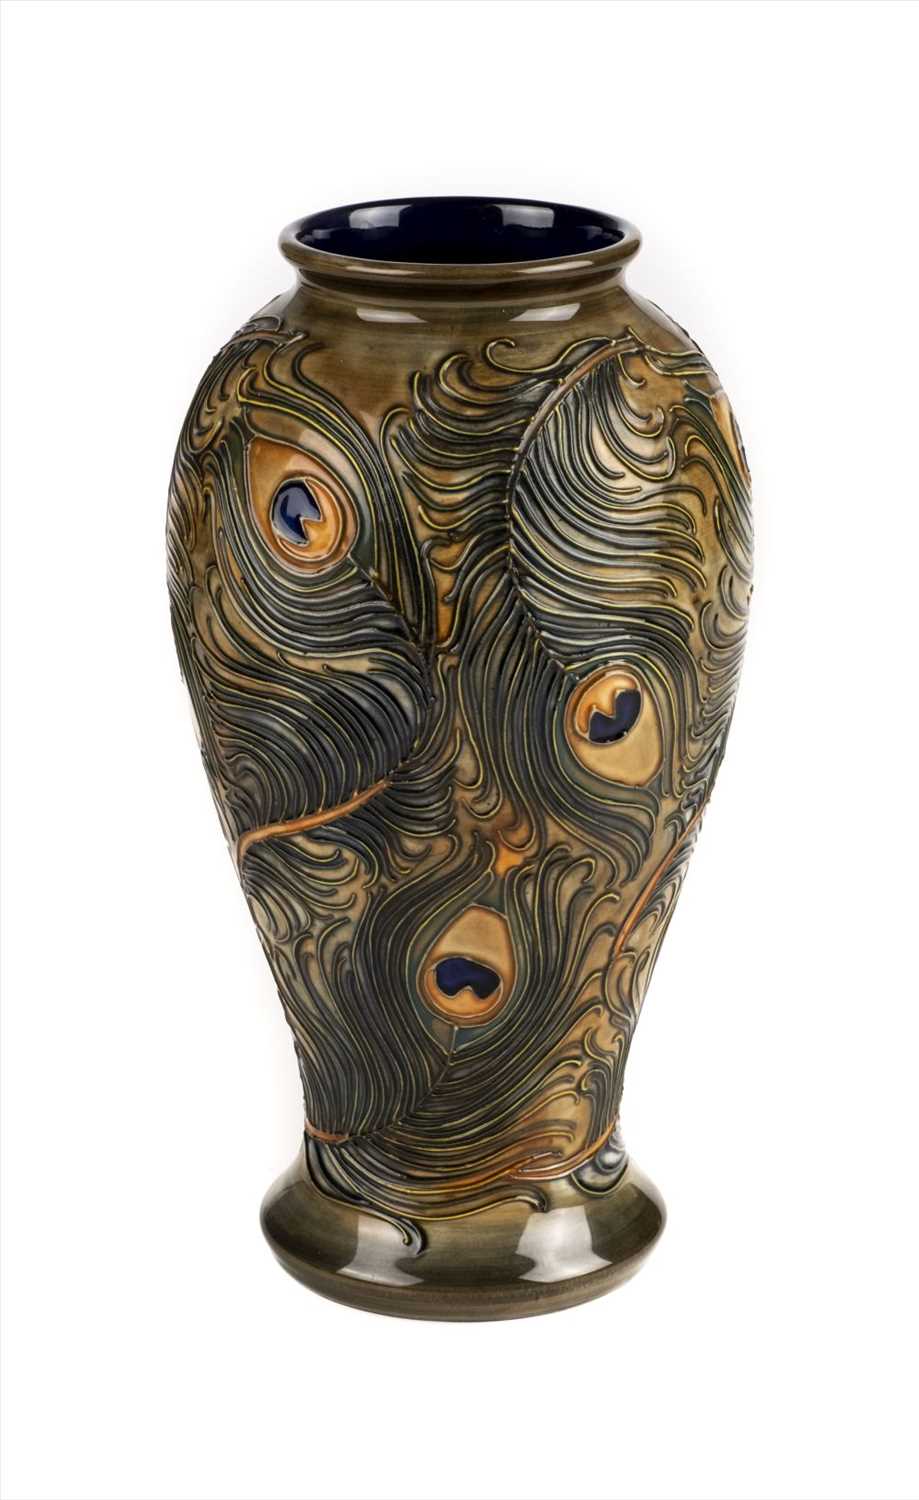 Lot 11 - Moorcroft. A Moorcroft pottery 'Peacock' pattern vase